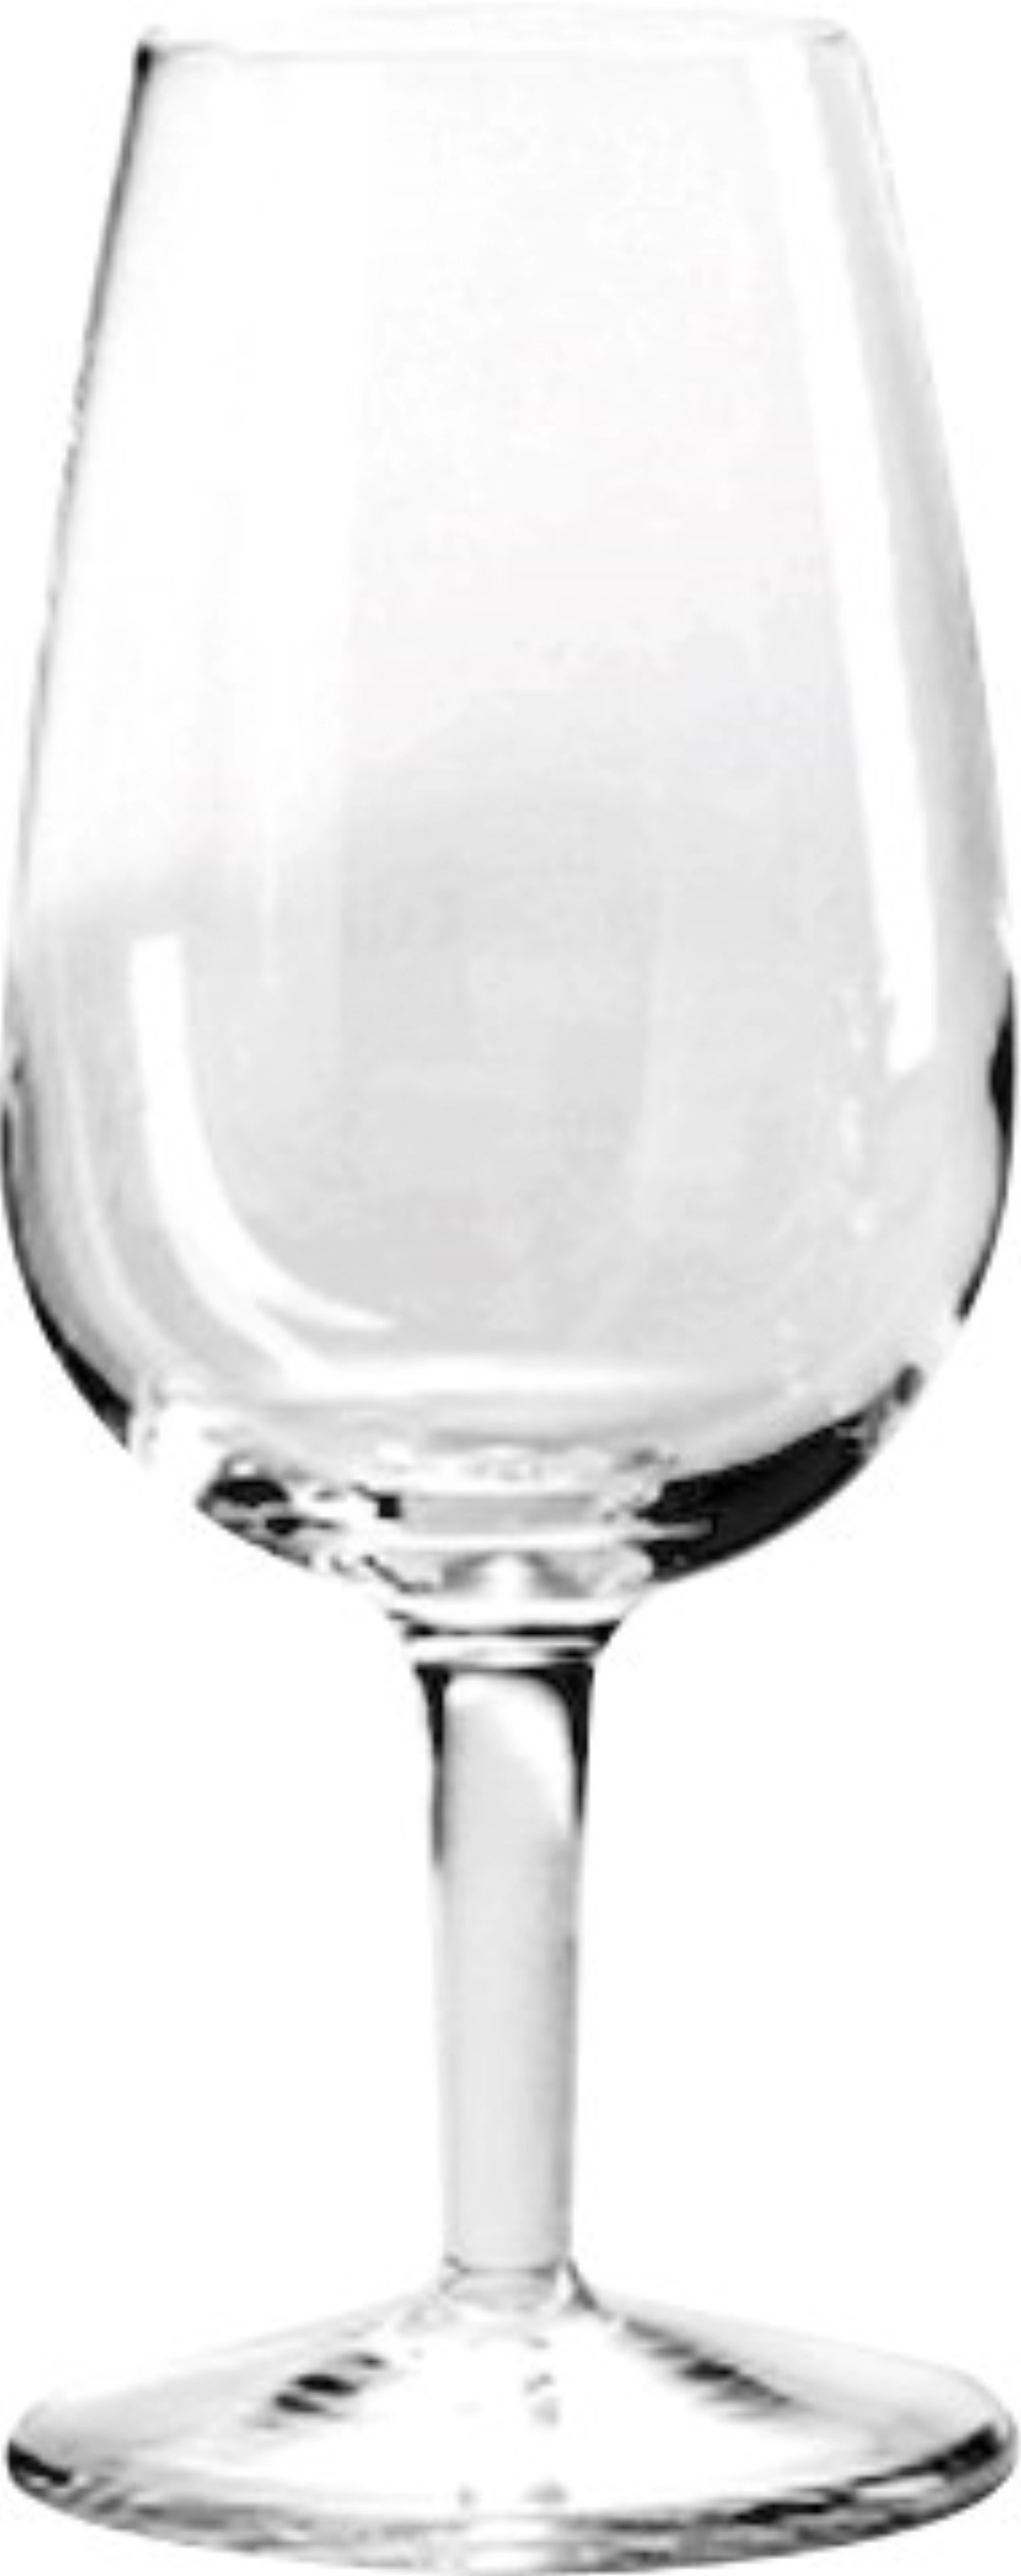 D.o.c. gobelet à vin blanc 22 cl 15.5cm